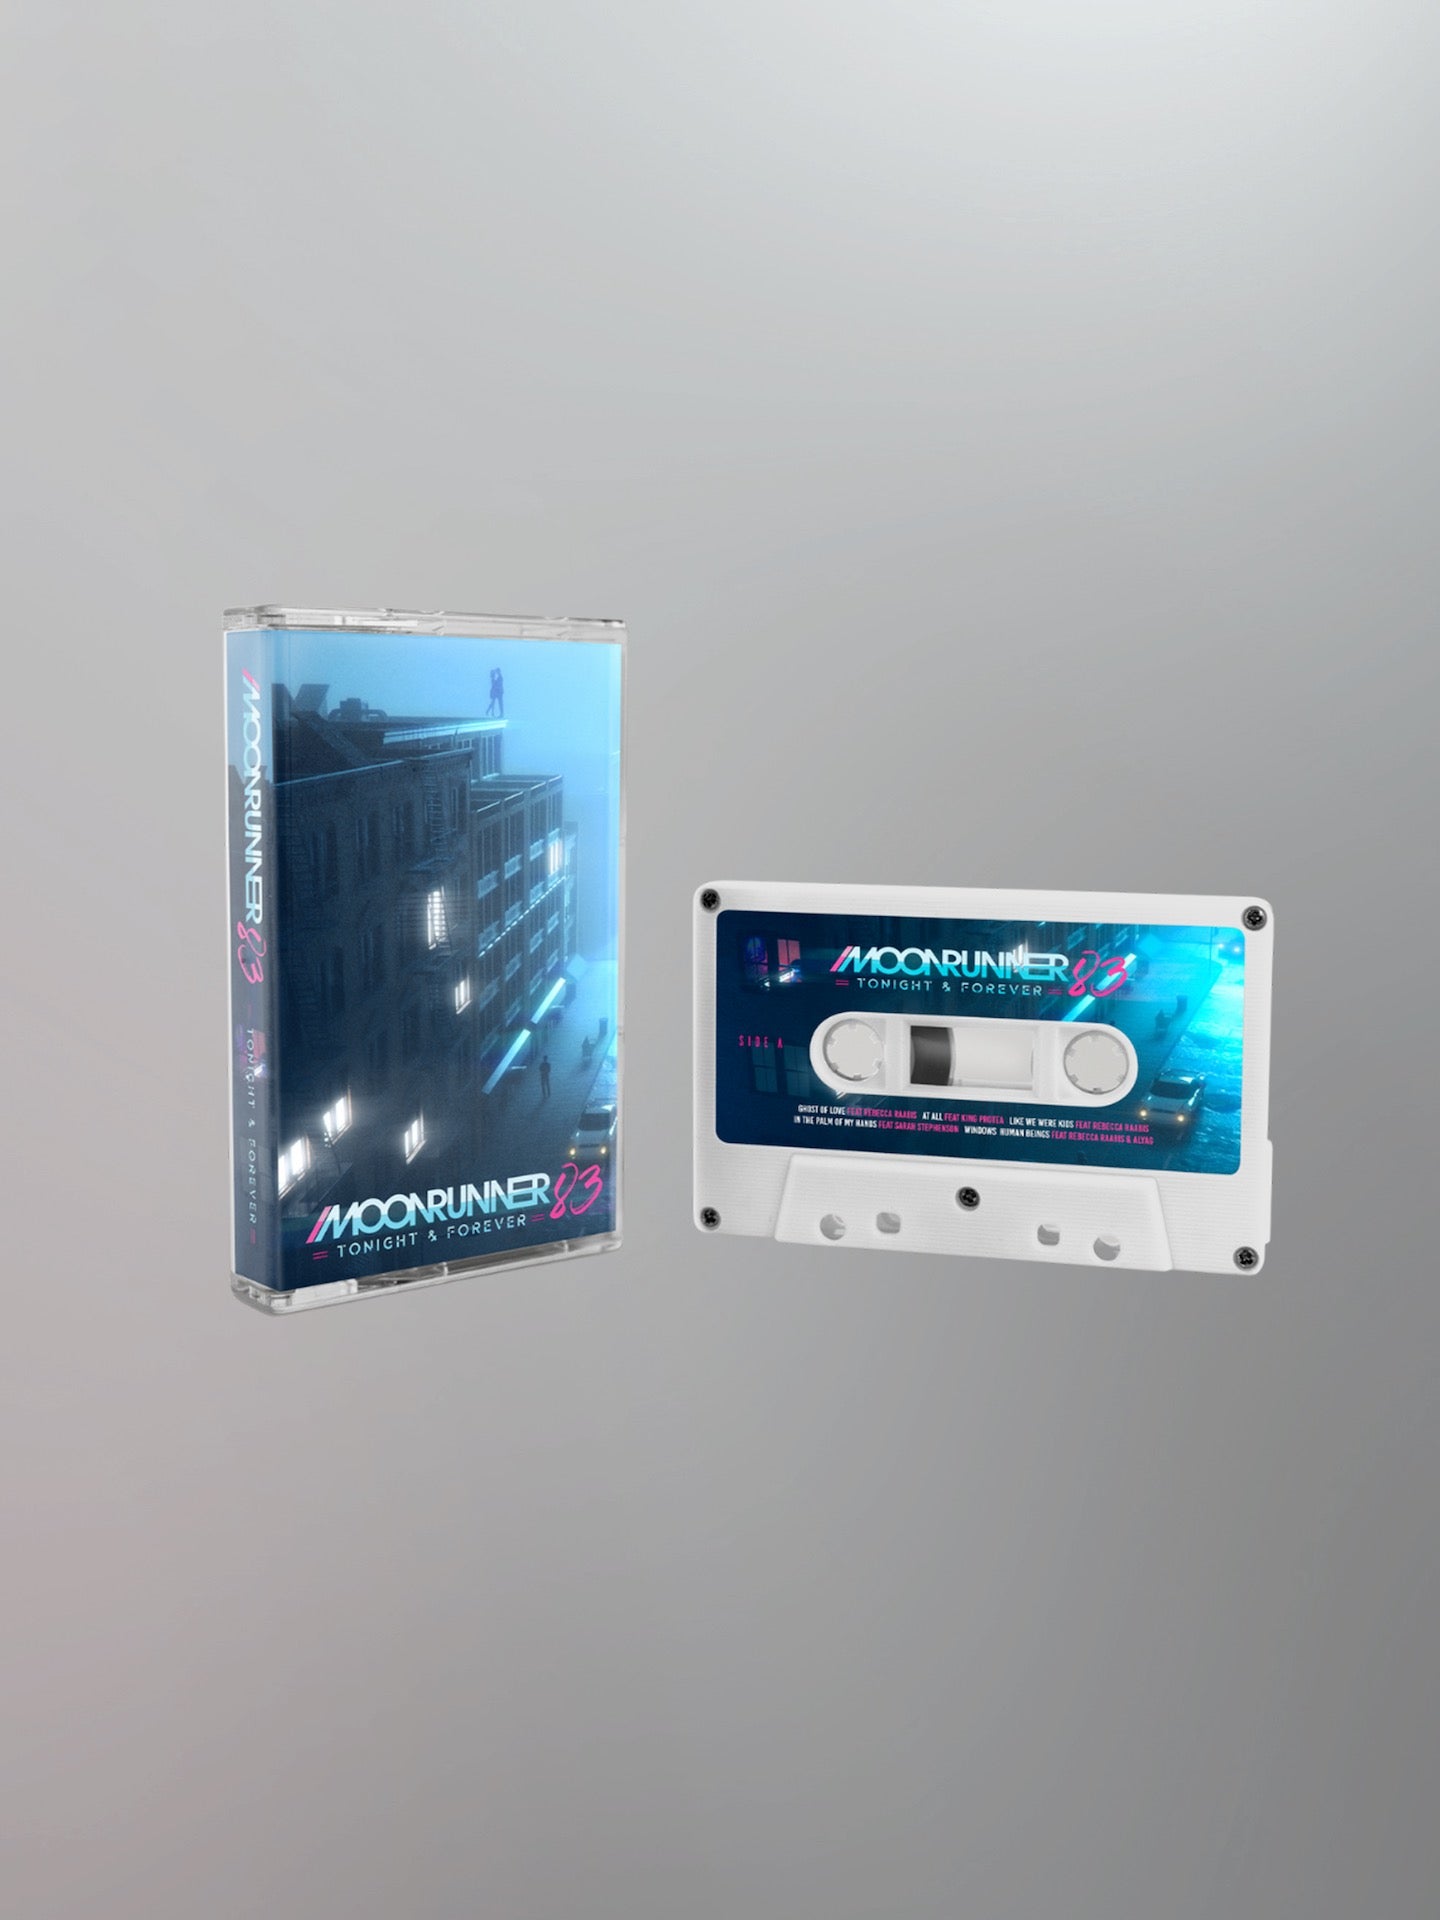 Moonrunner83 - Tonight & Forever Limited Edition Cassette